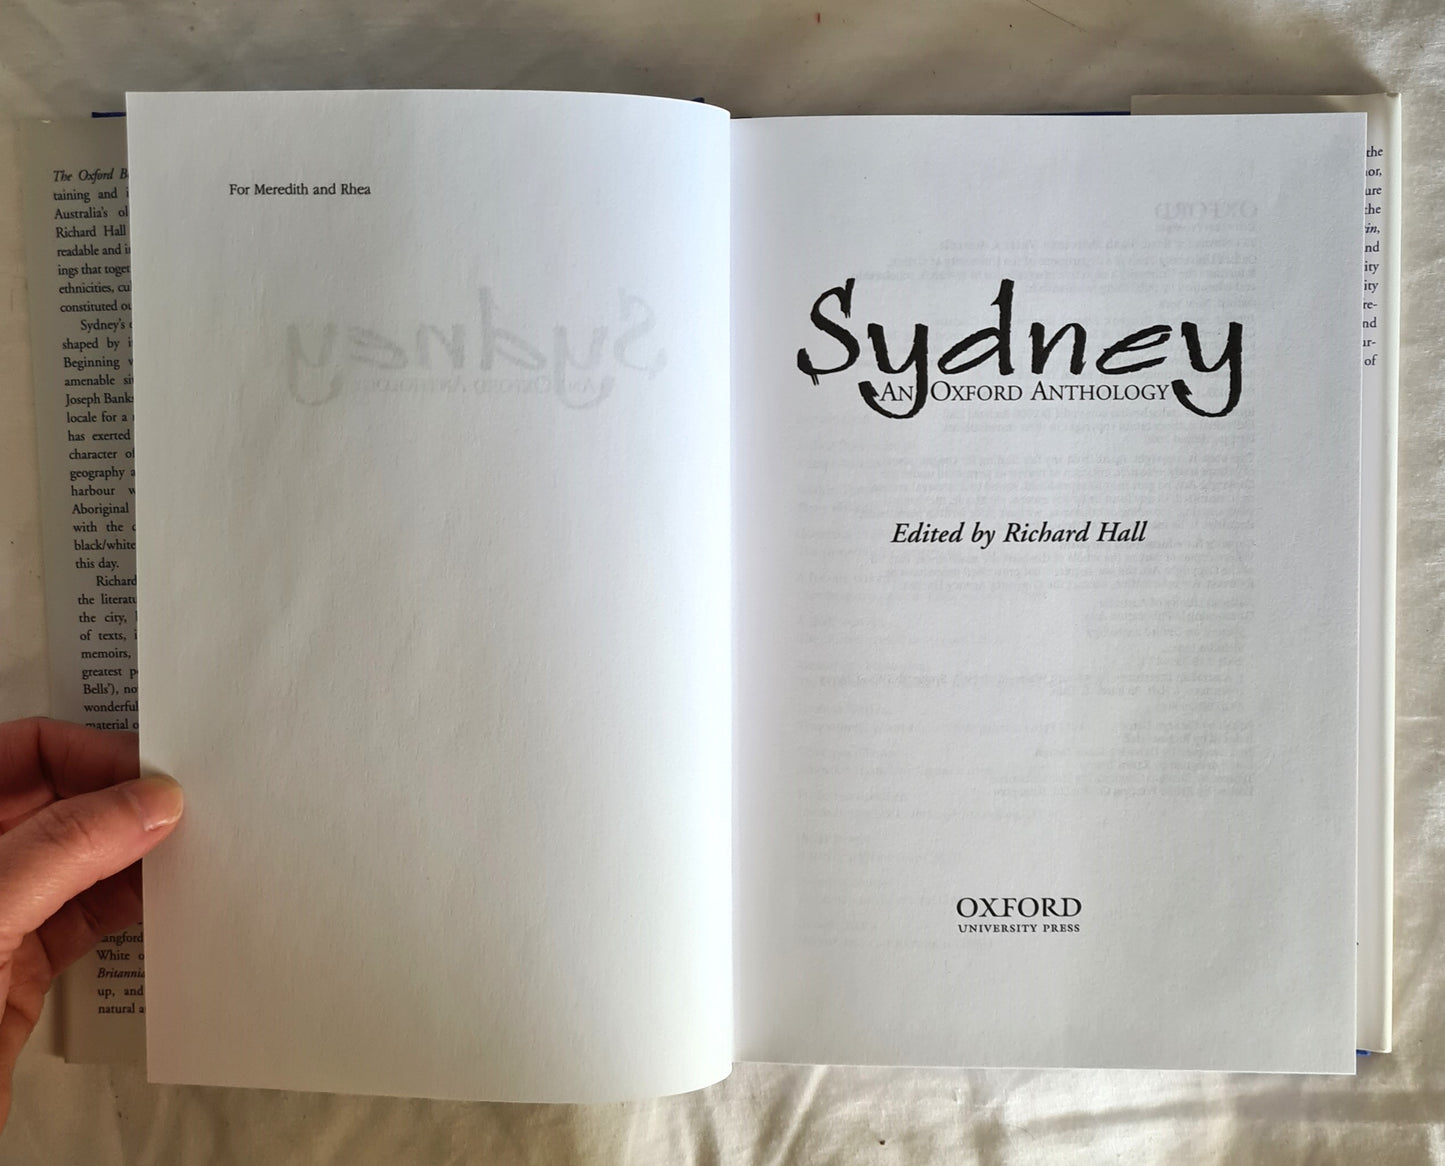 Sydney  An Oxford Anthology  Edited by Richard Hall